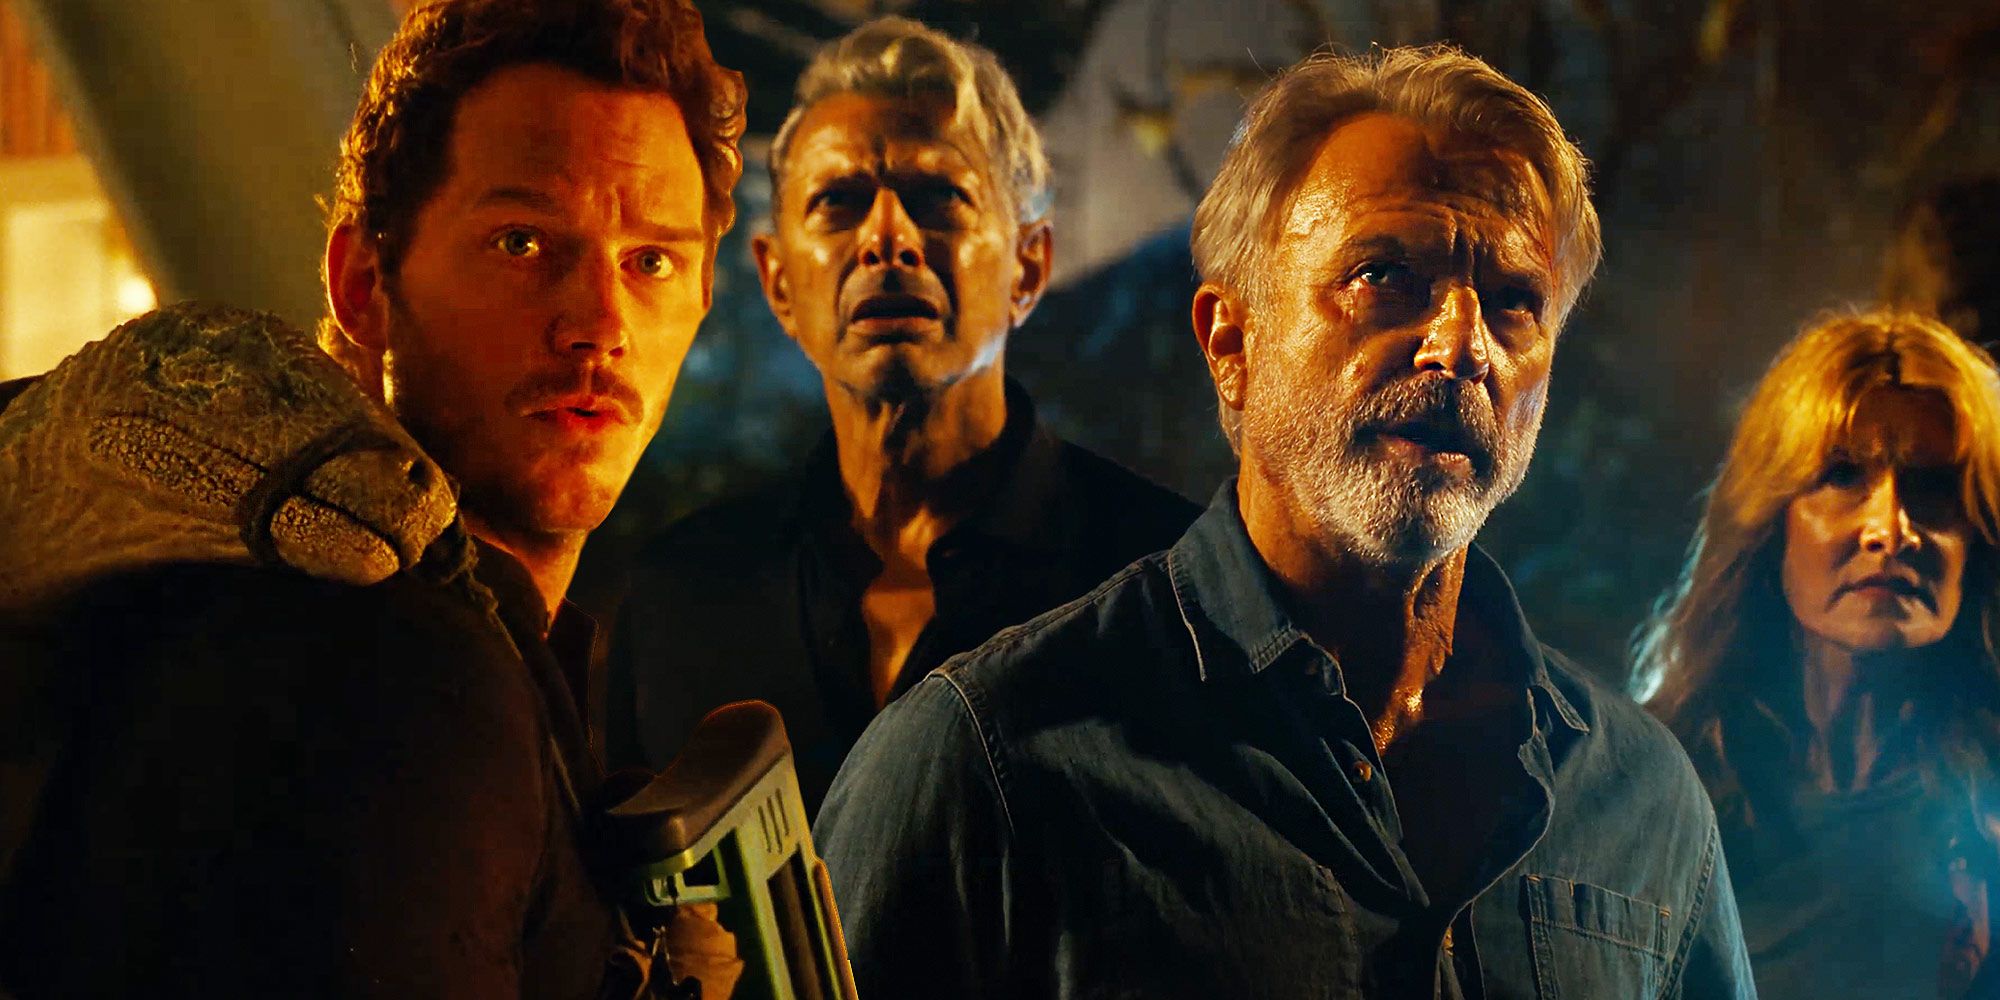 Tráiler de Jurassic World Dominion: el elenco de OG se burla del personaje de Chris Pratt